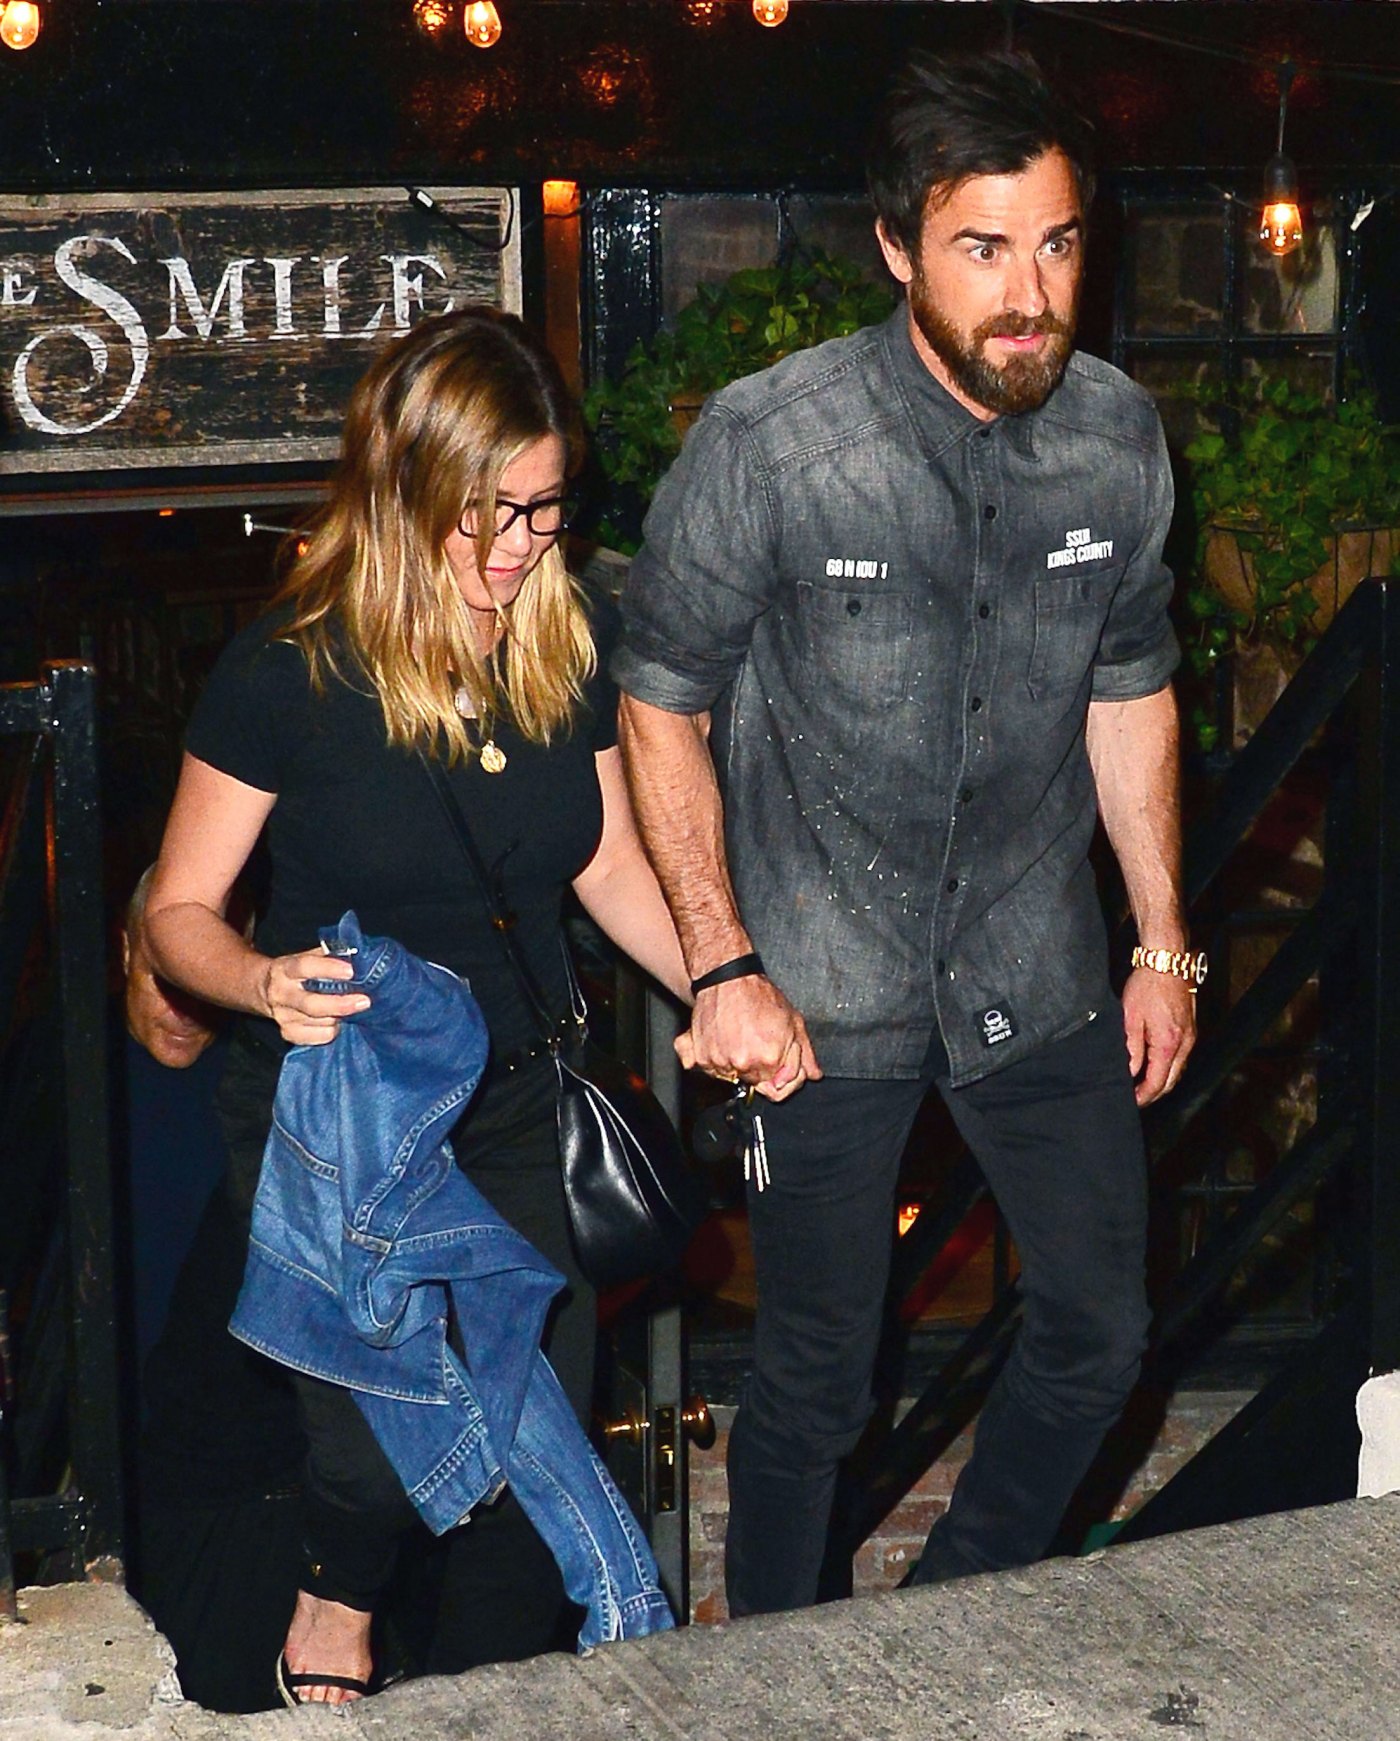 Jennifer Aniston Goes on Date Night With Hot, Scruffy Justin Theroux